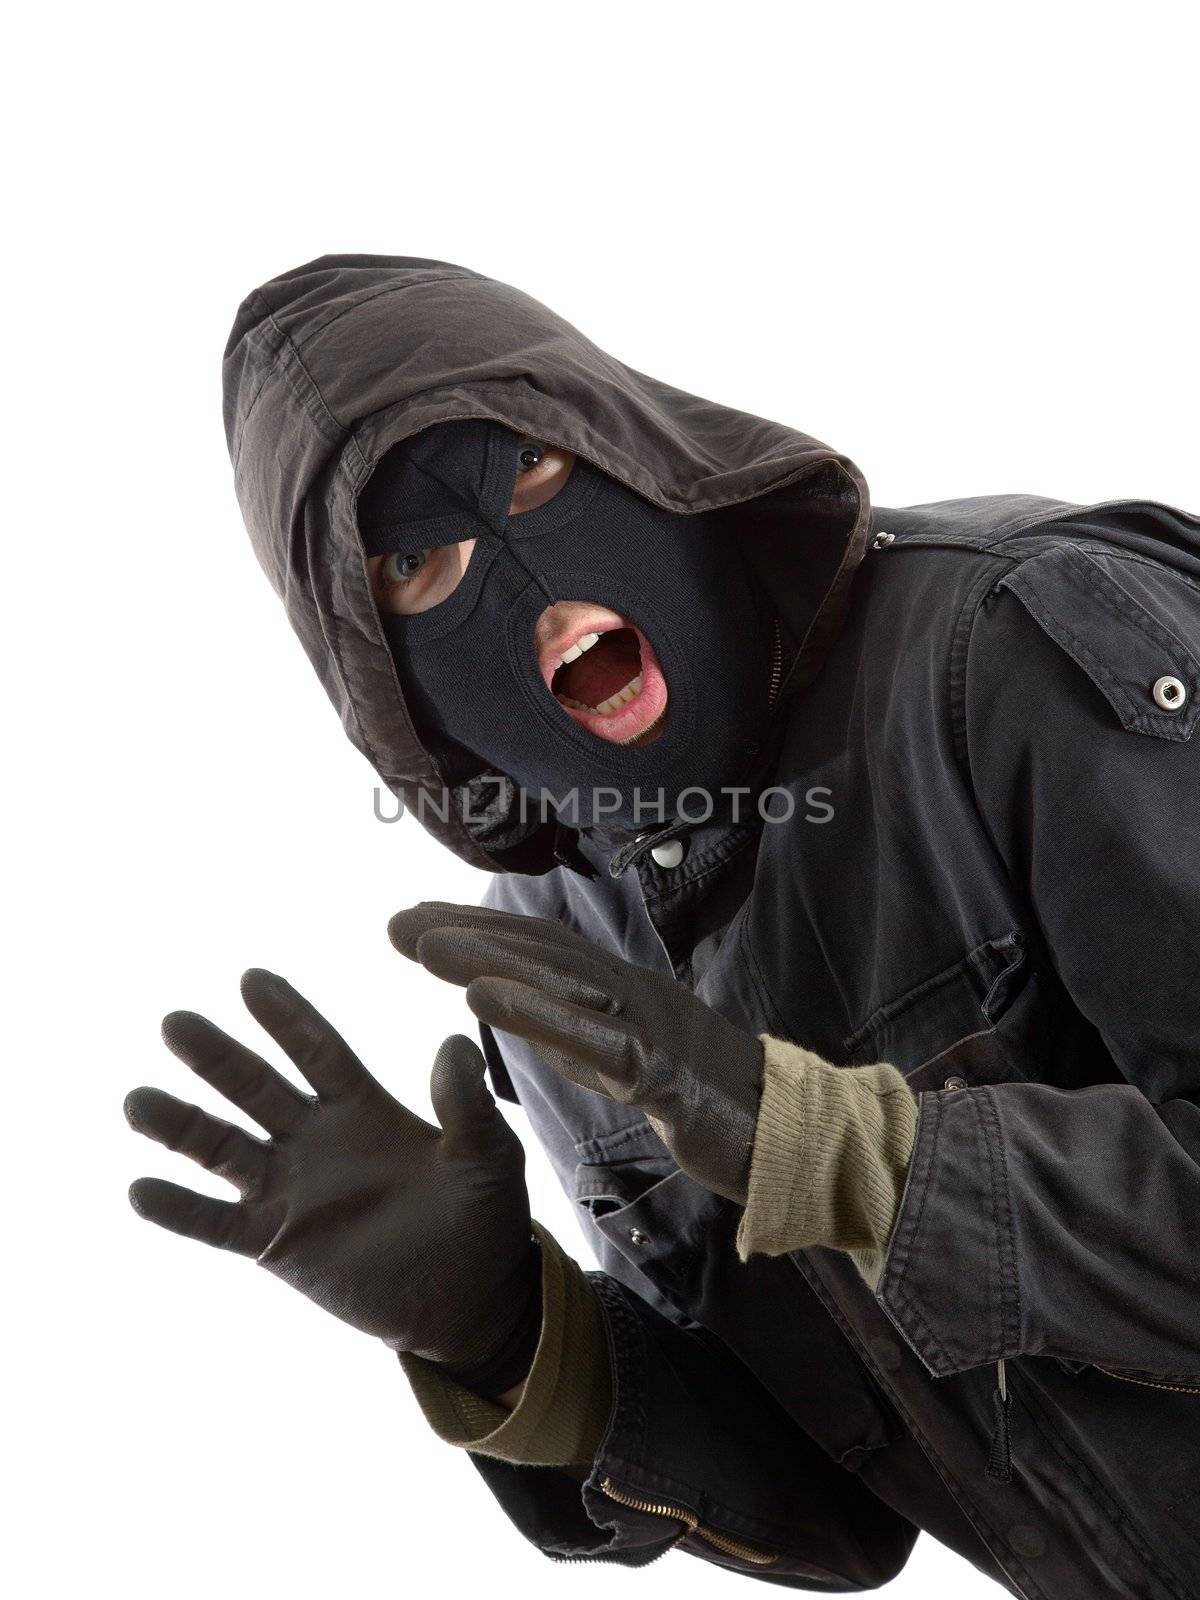 Surprised robber in a black mask